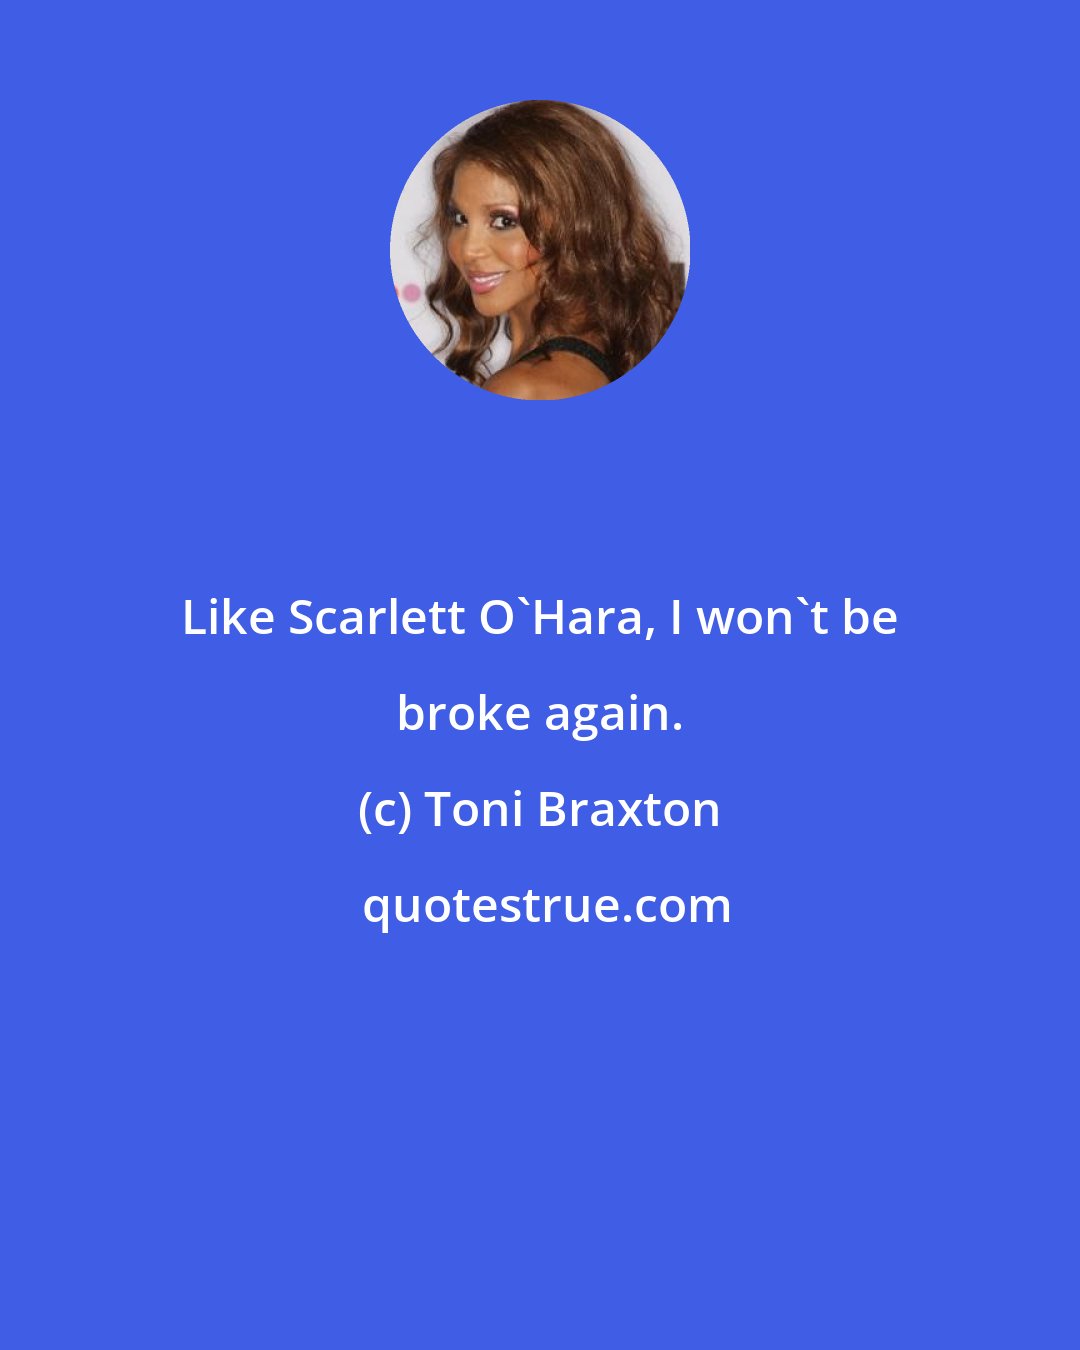 Toni Braxton: Like Scarlett O'Hara, I won't be broke again.